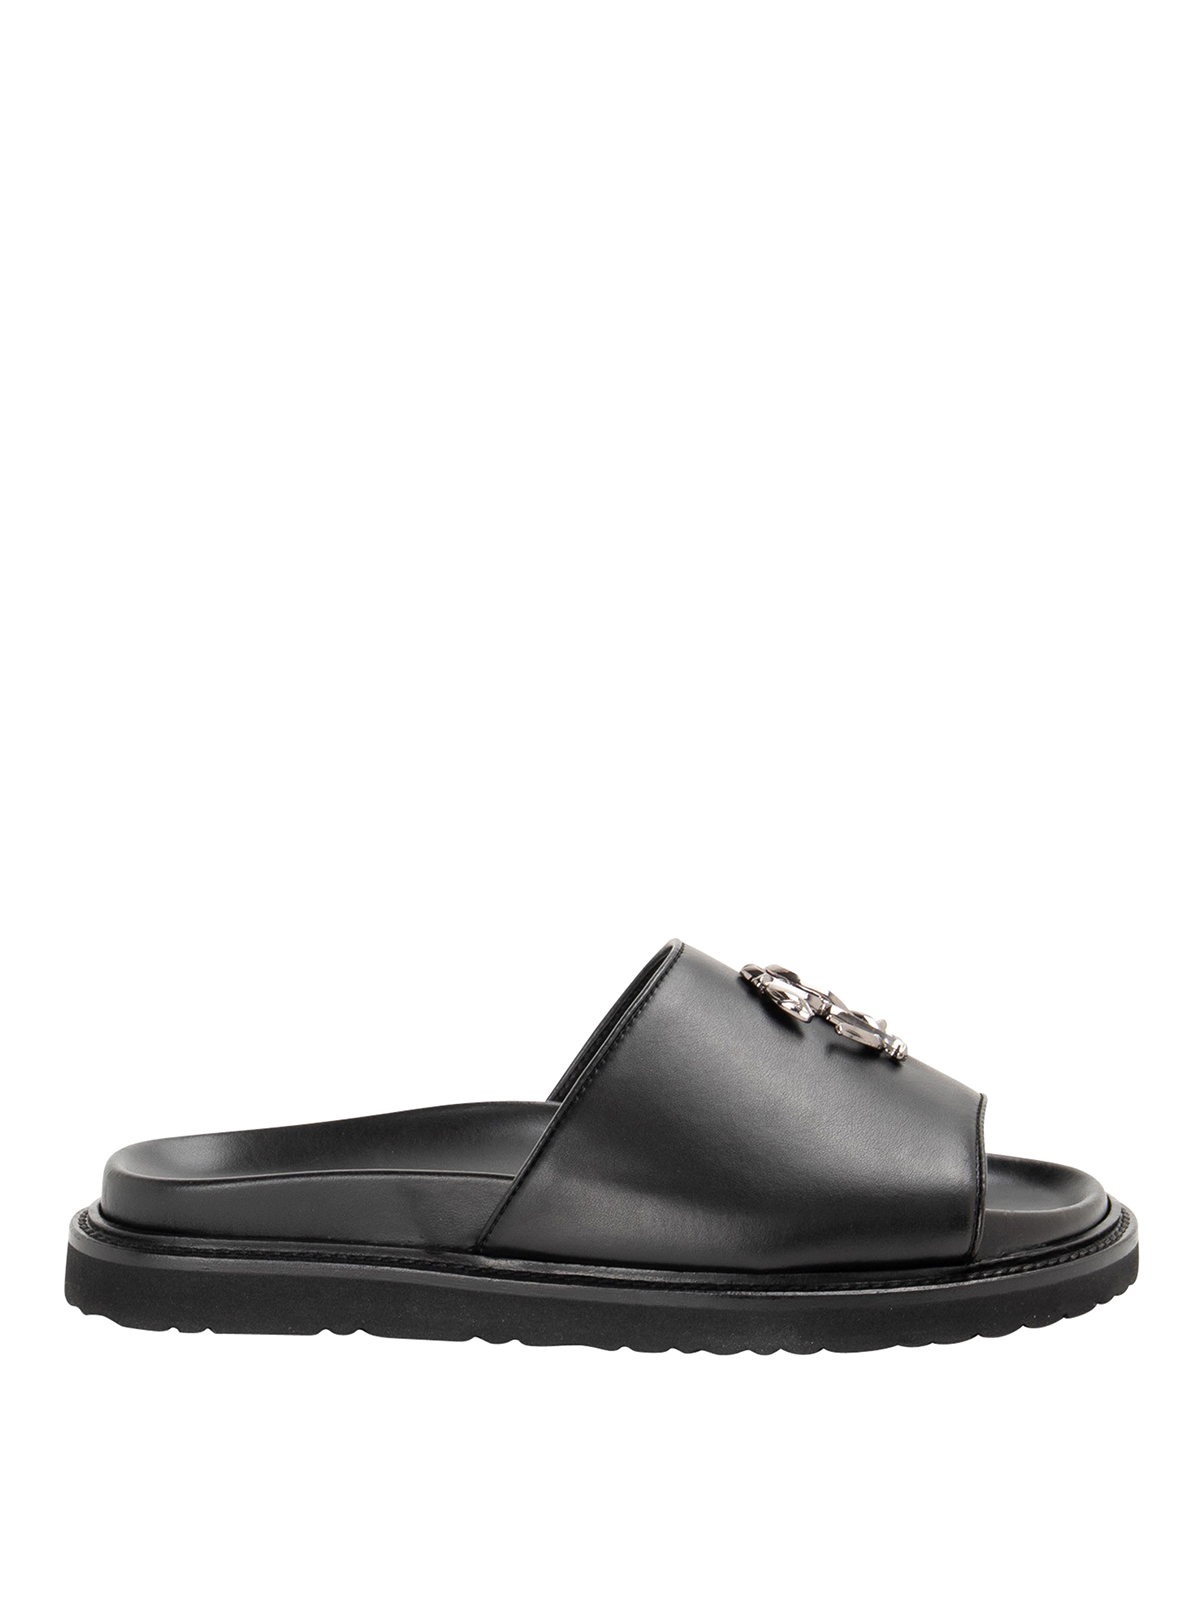 Roberto Cavalli Logo Leather Sandals In Black